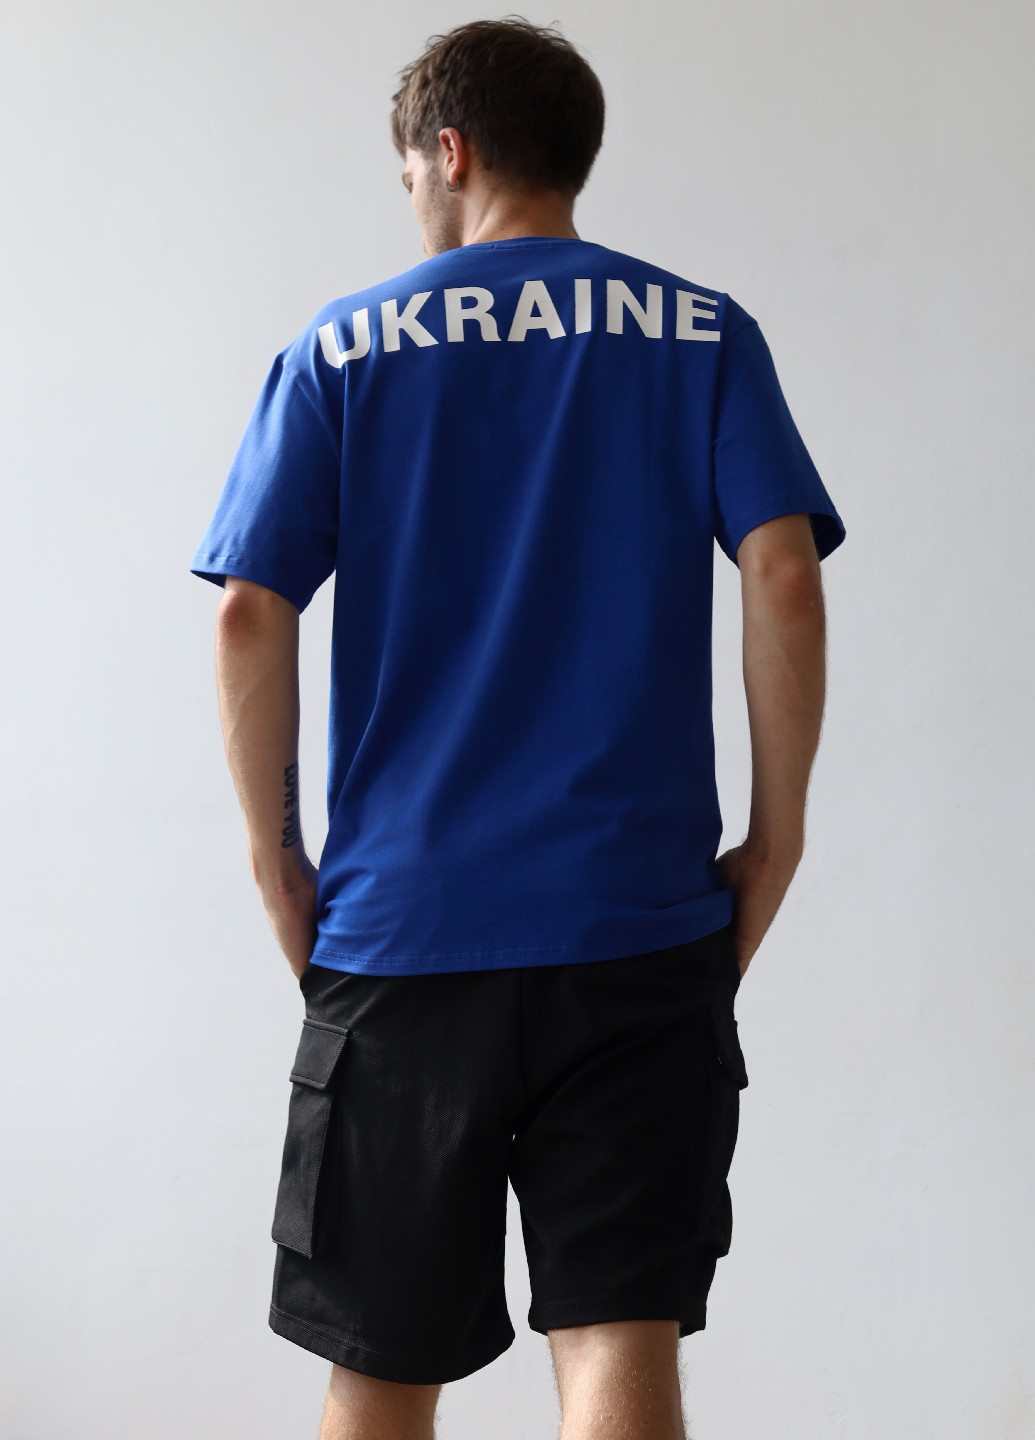 Синяя футболка "ukraine" синего цвета Rebellis